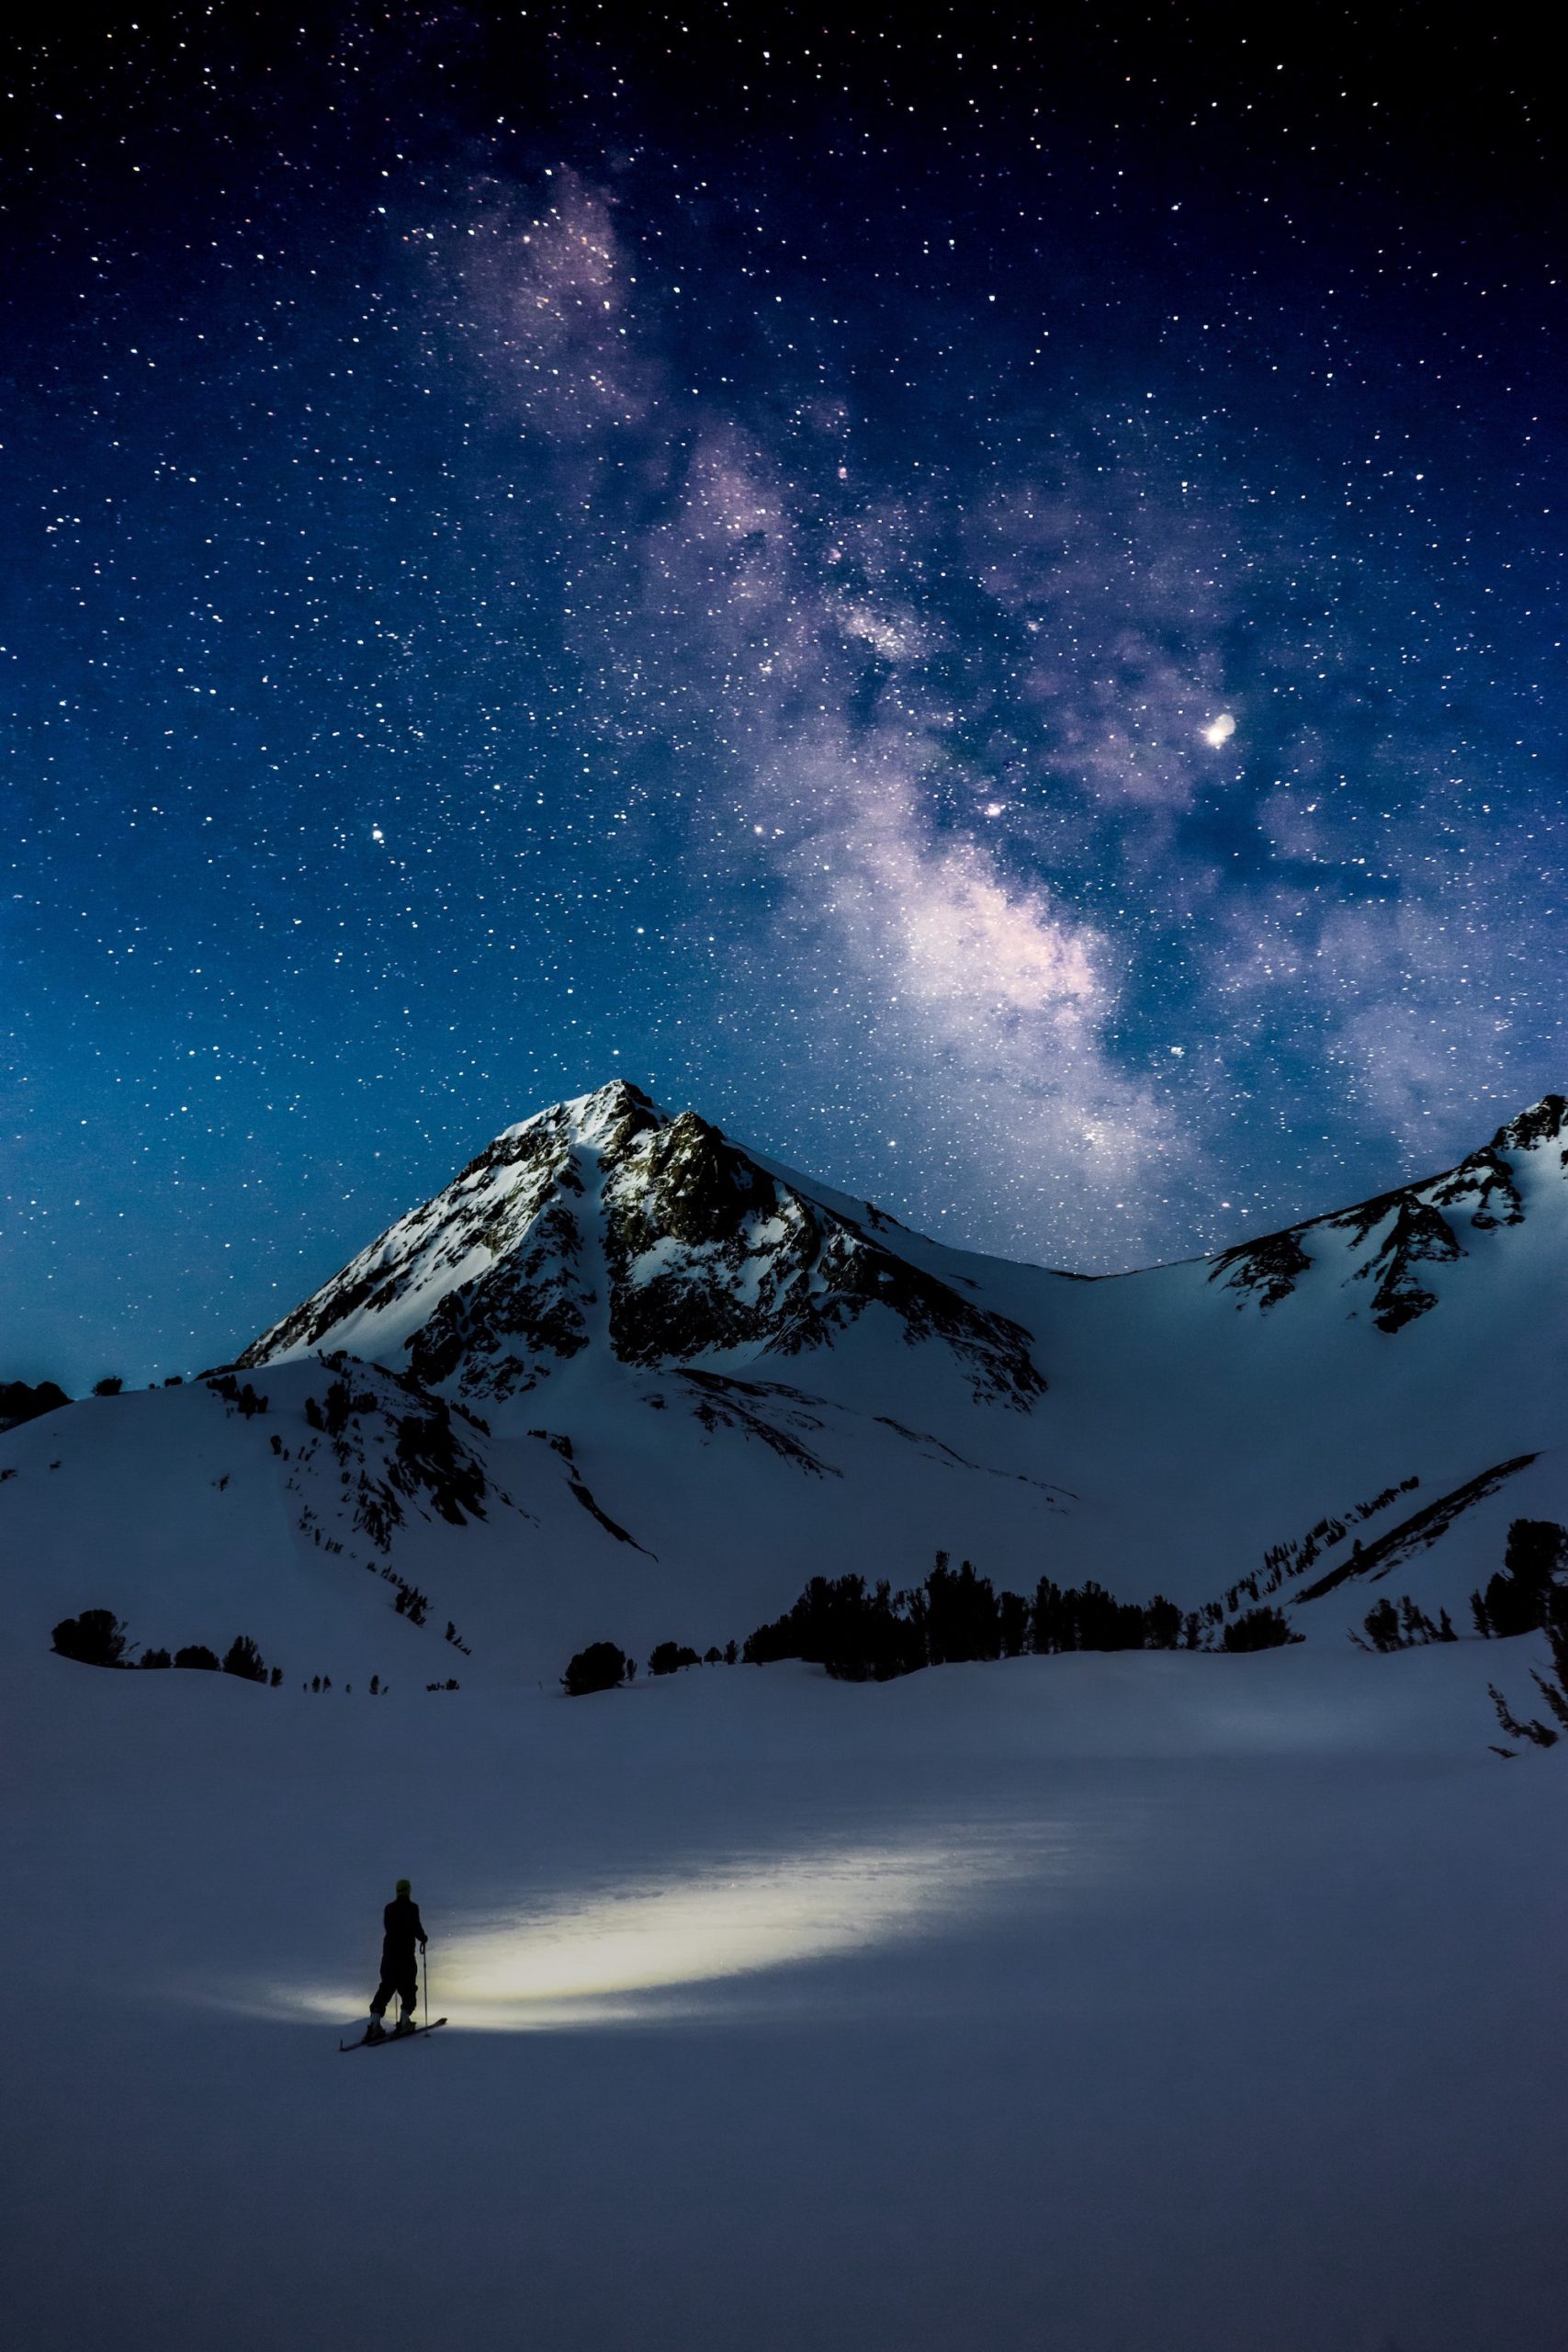 cross country skiing under a starry winter sky at night_ robson-hatsukami-morgan-bkdzvgBB7rQ-unsplash